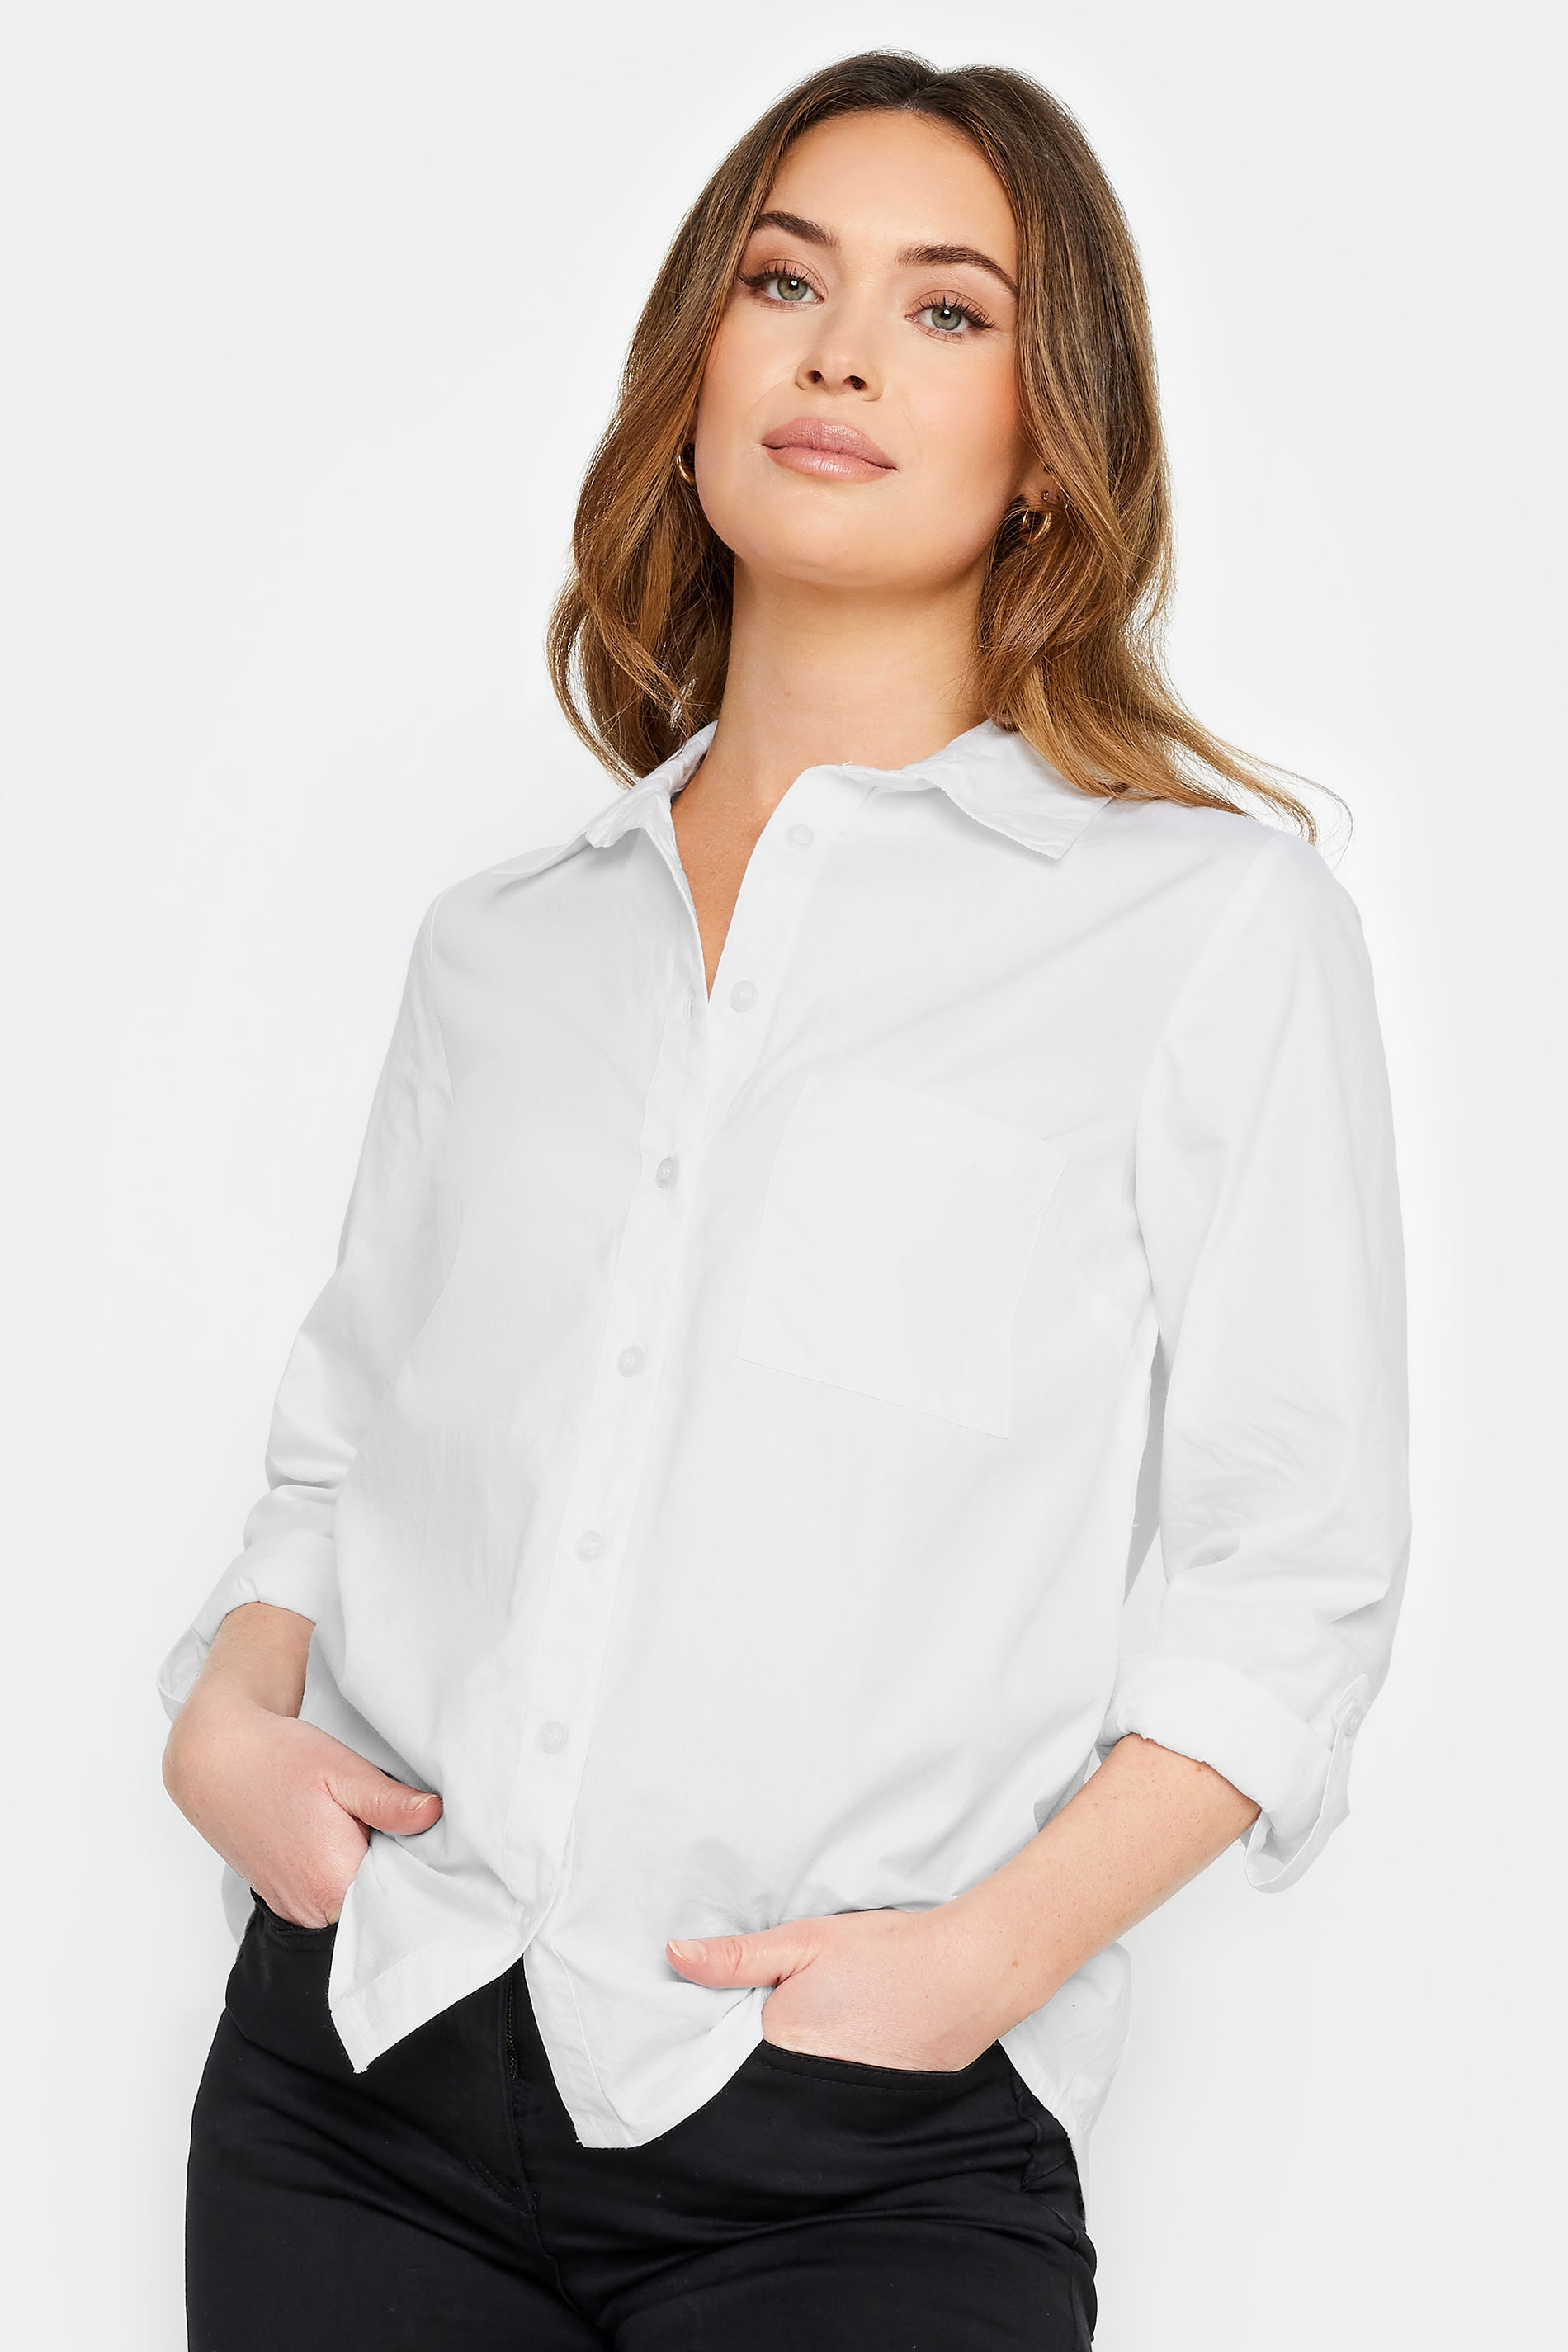 M&Co Petite White Oversized Cotton Poplin Shirt | M&Co 1